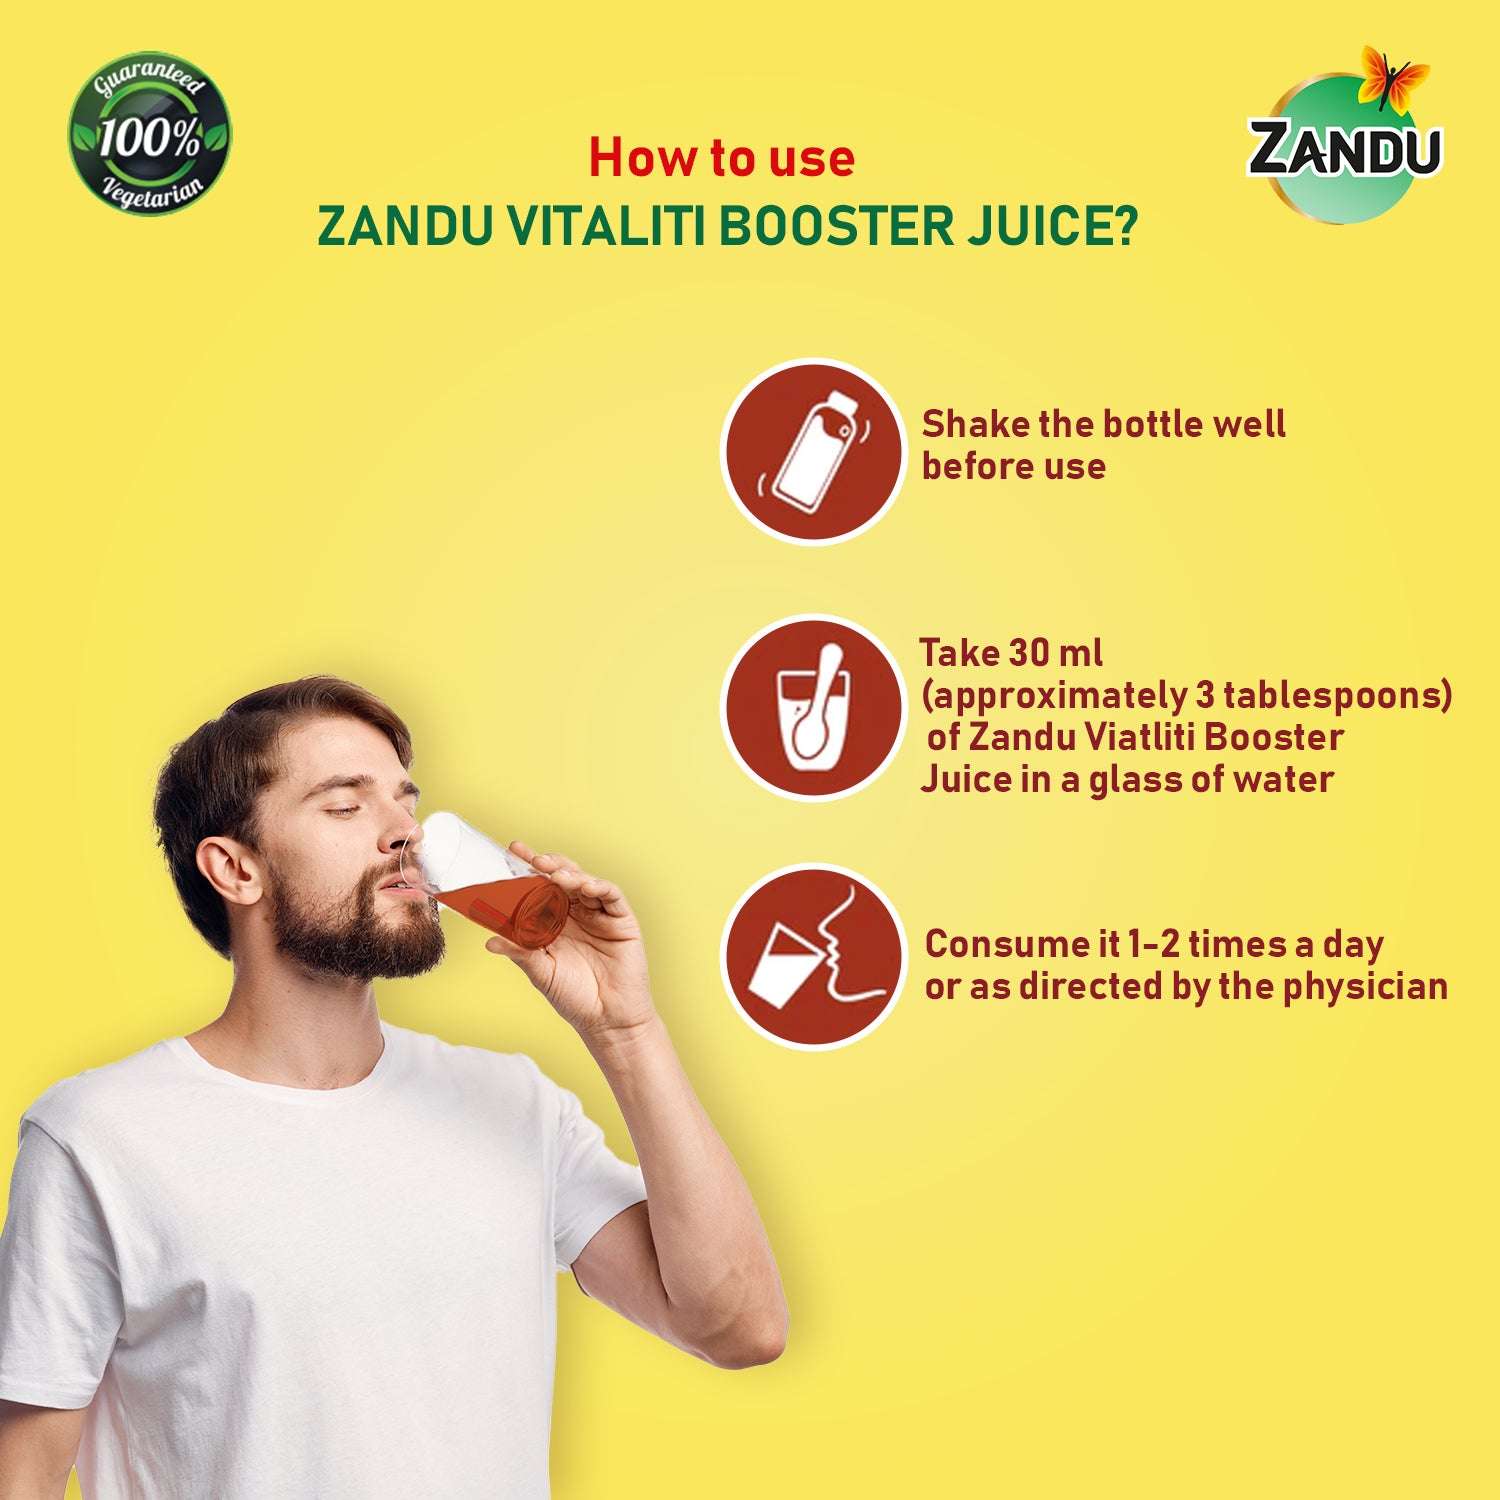 How to use Zandu Vitality Booster Juice?